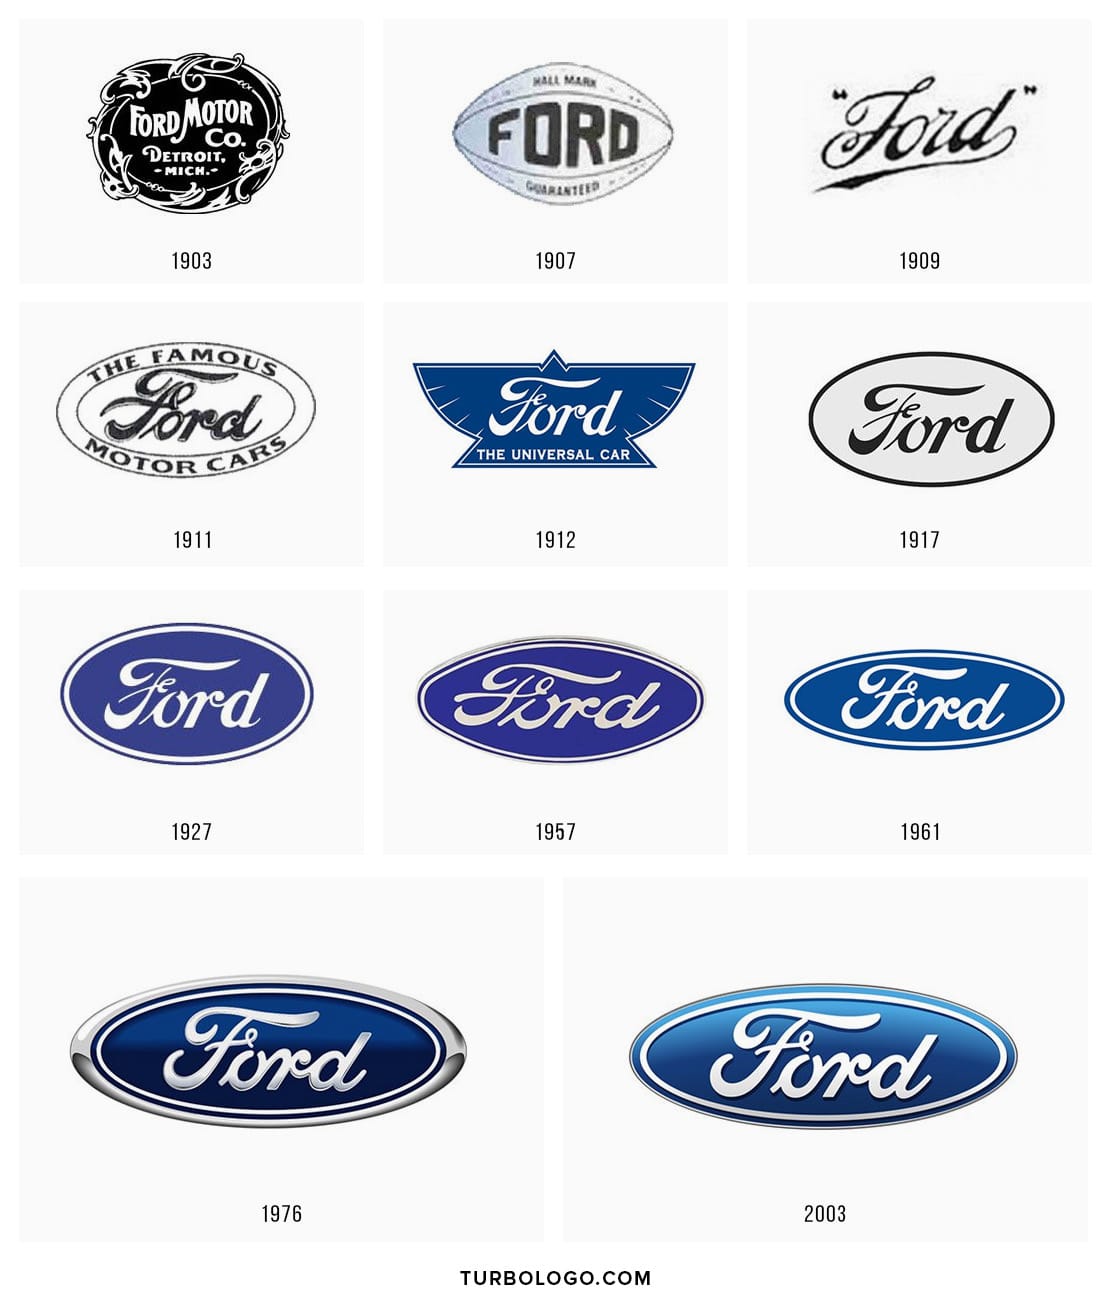 Ford logo history